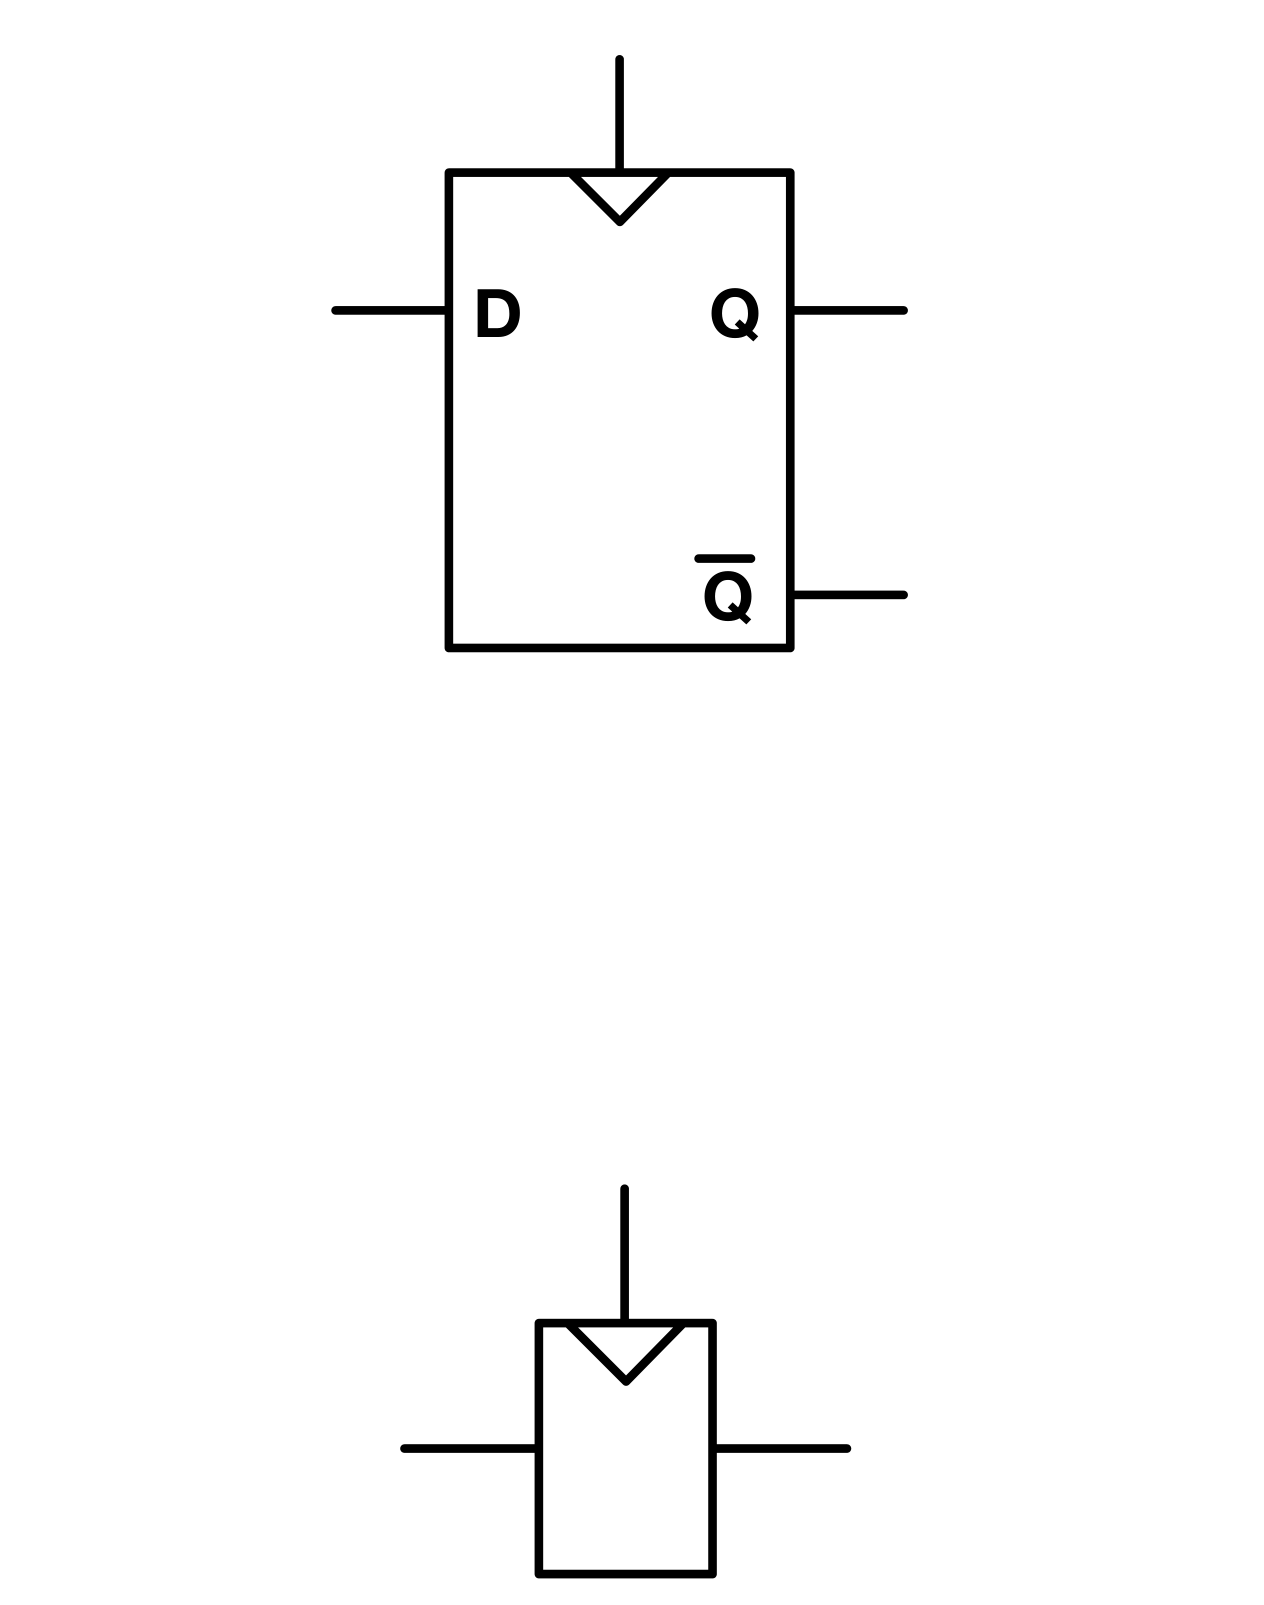 Figure 18: D Flip Flop Symbols